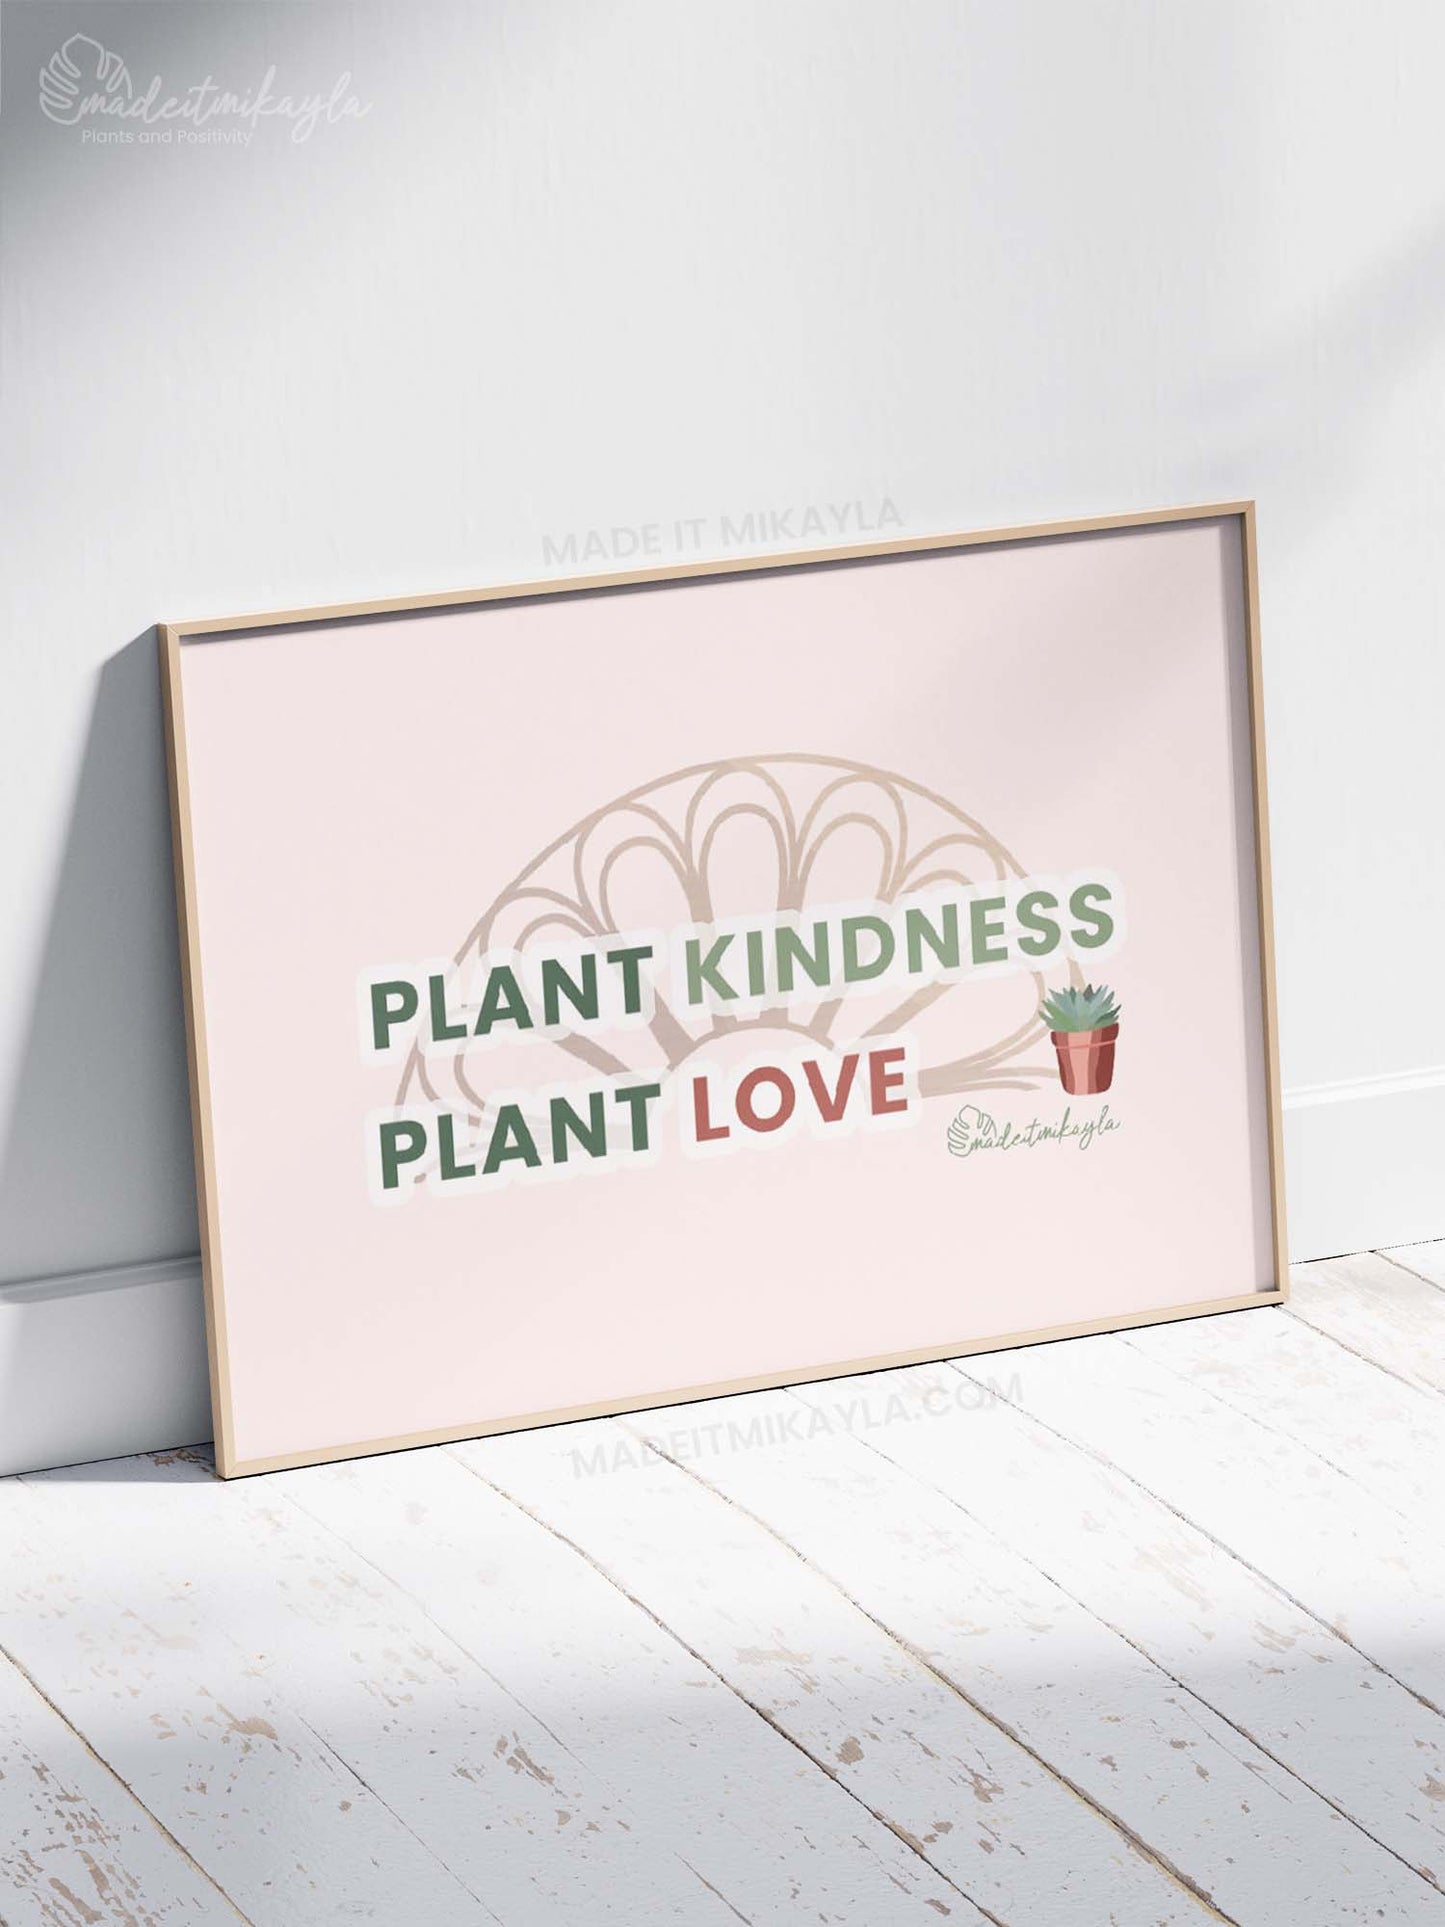 Plant Kindness Plant Love Art Print | MadeItMikayla